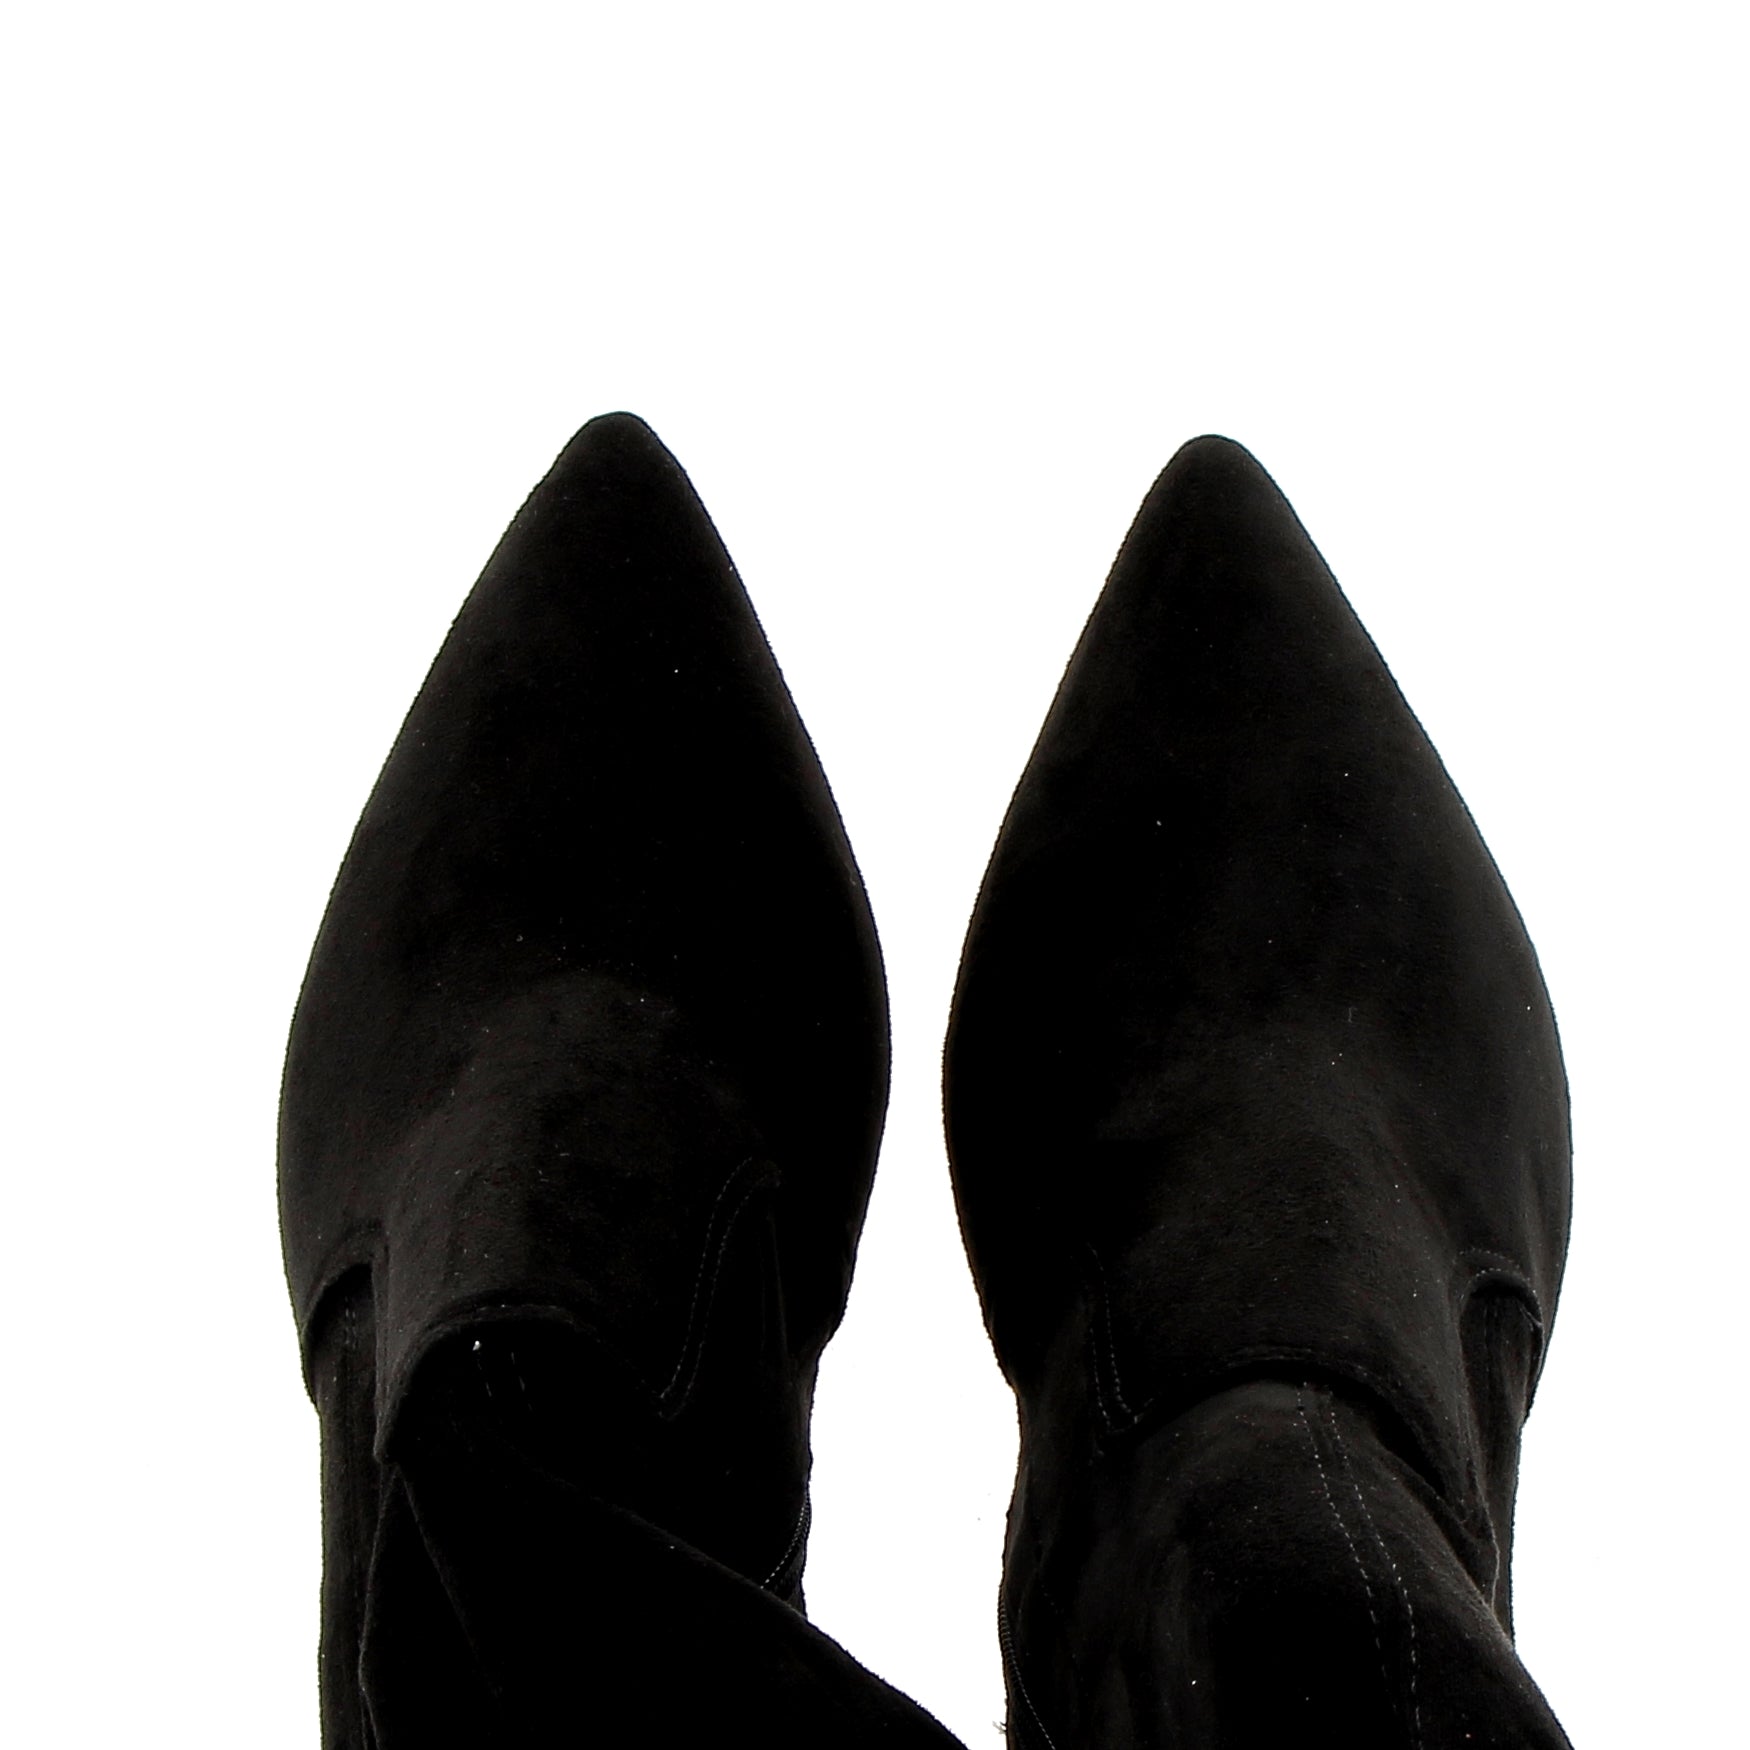 Black cuissard boot